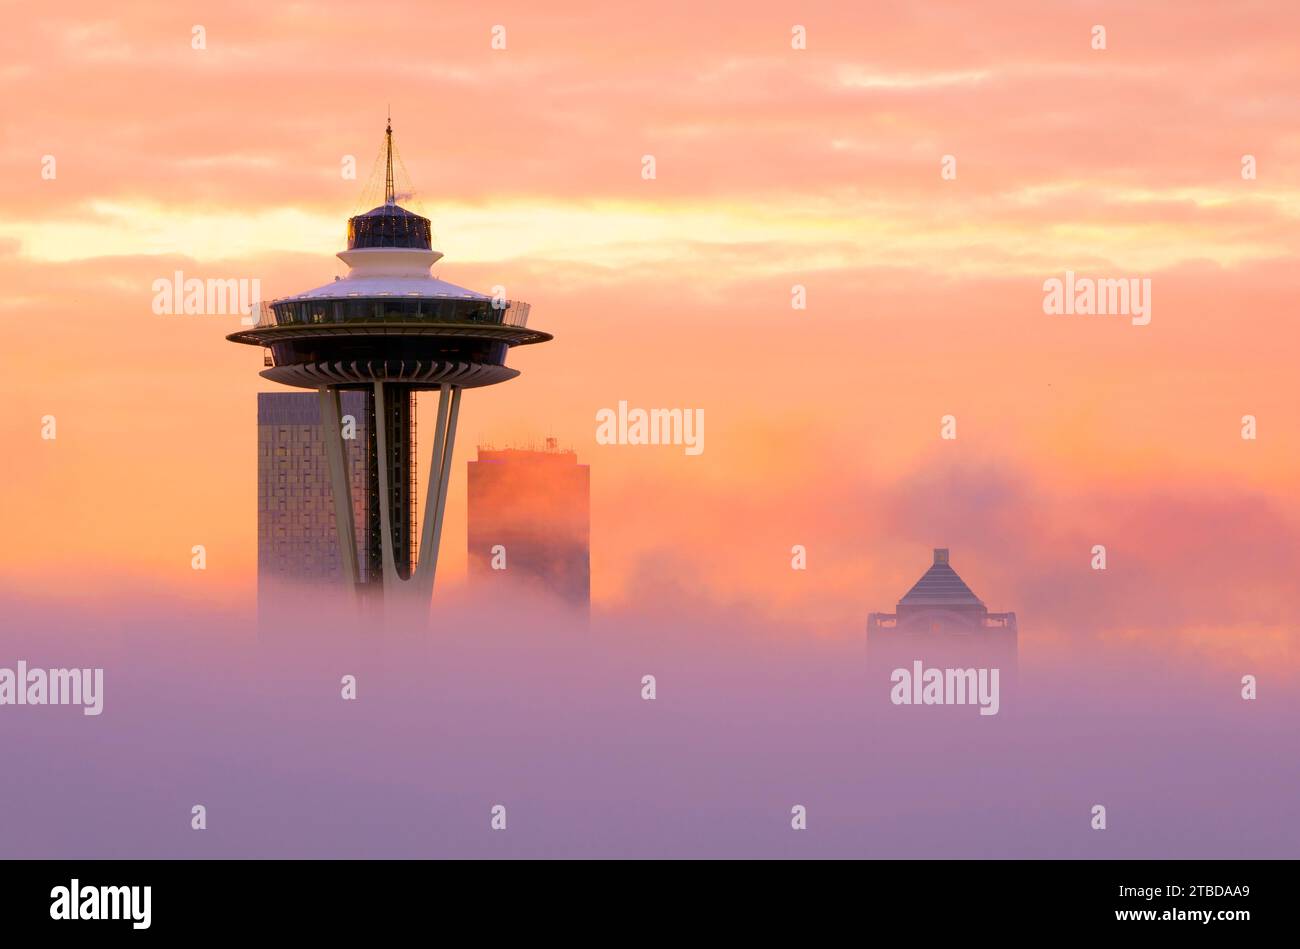 WA24639-00....WASHINGTON - Seattle Space Needle and city skyline from Kerry Park at sunrise on a fogy morning. Stock Photo